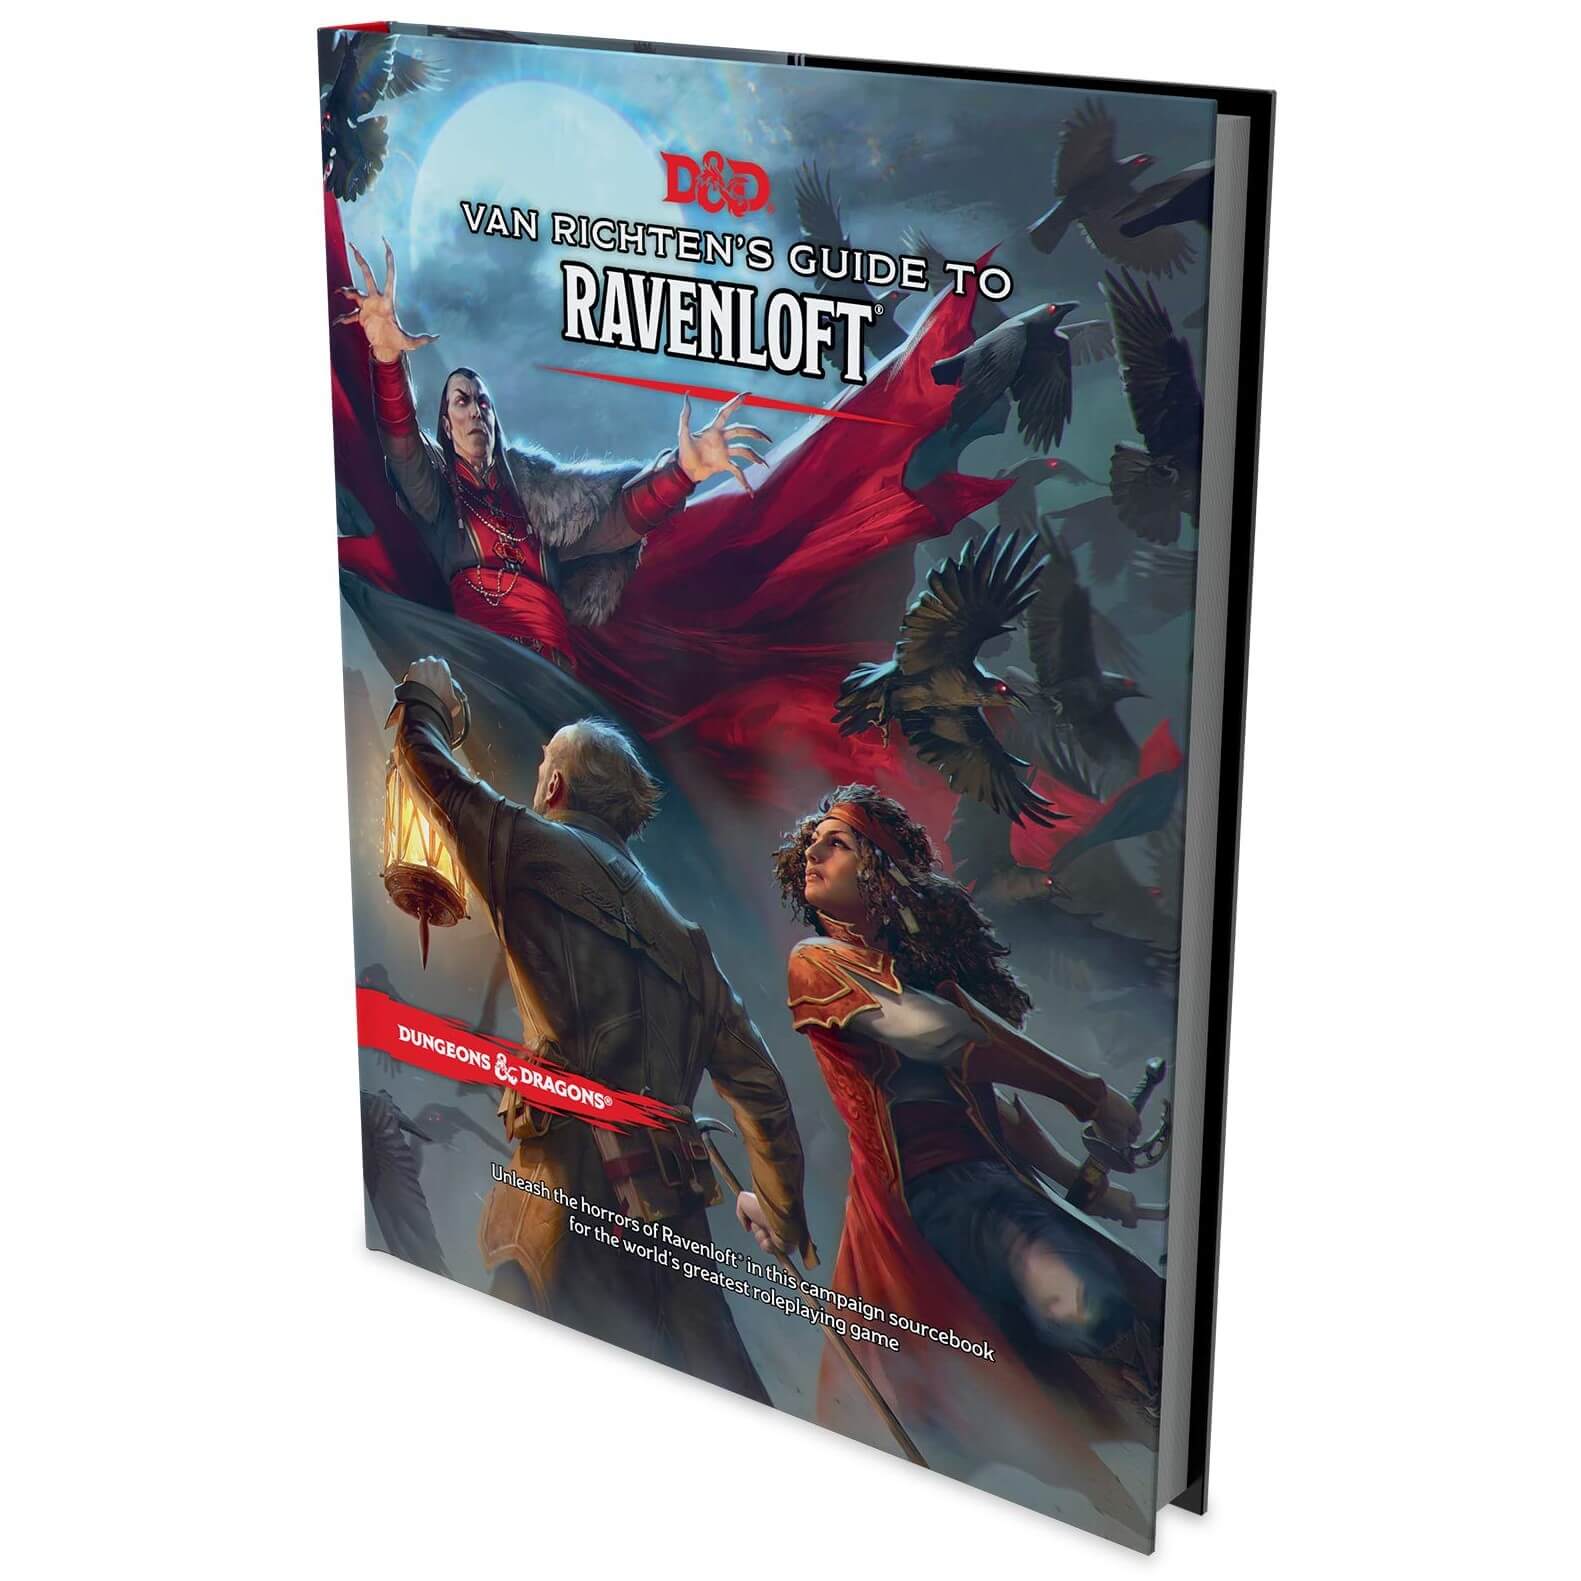 Product Image for D&D Van Richten's Guide to Ravenloft